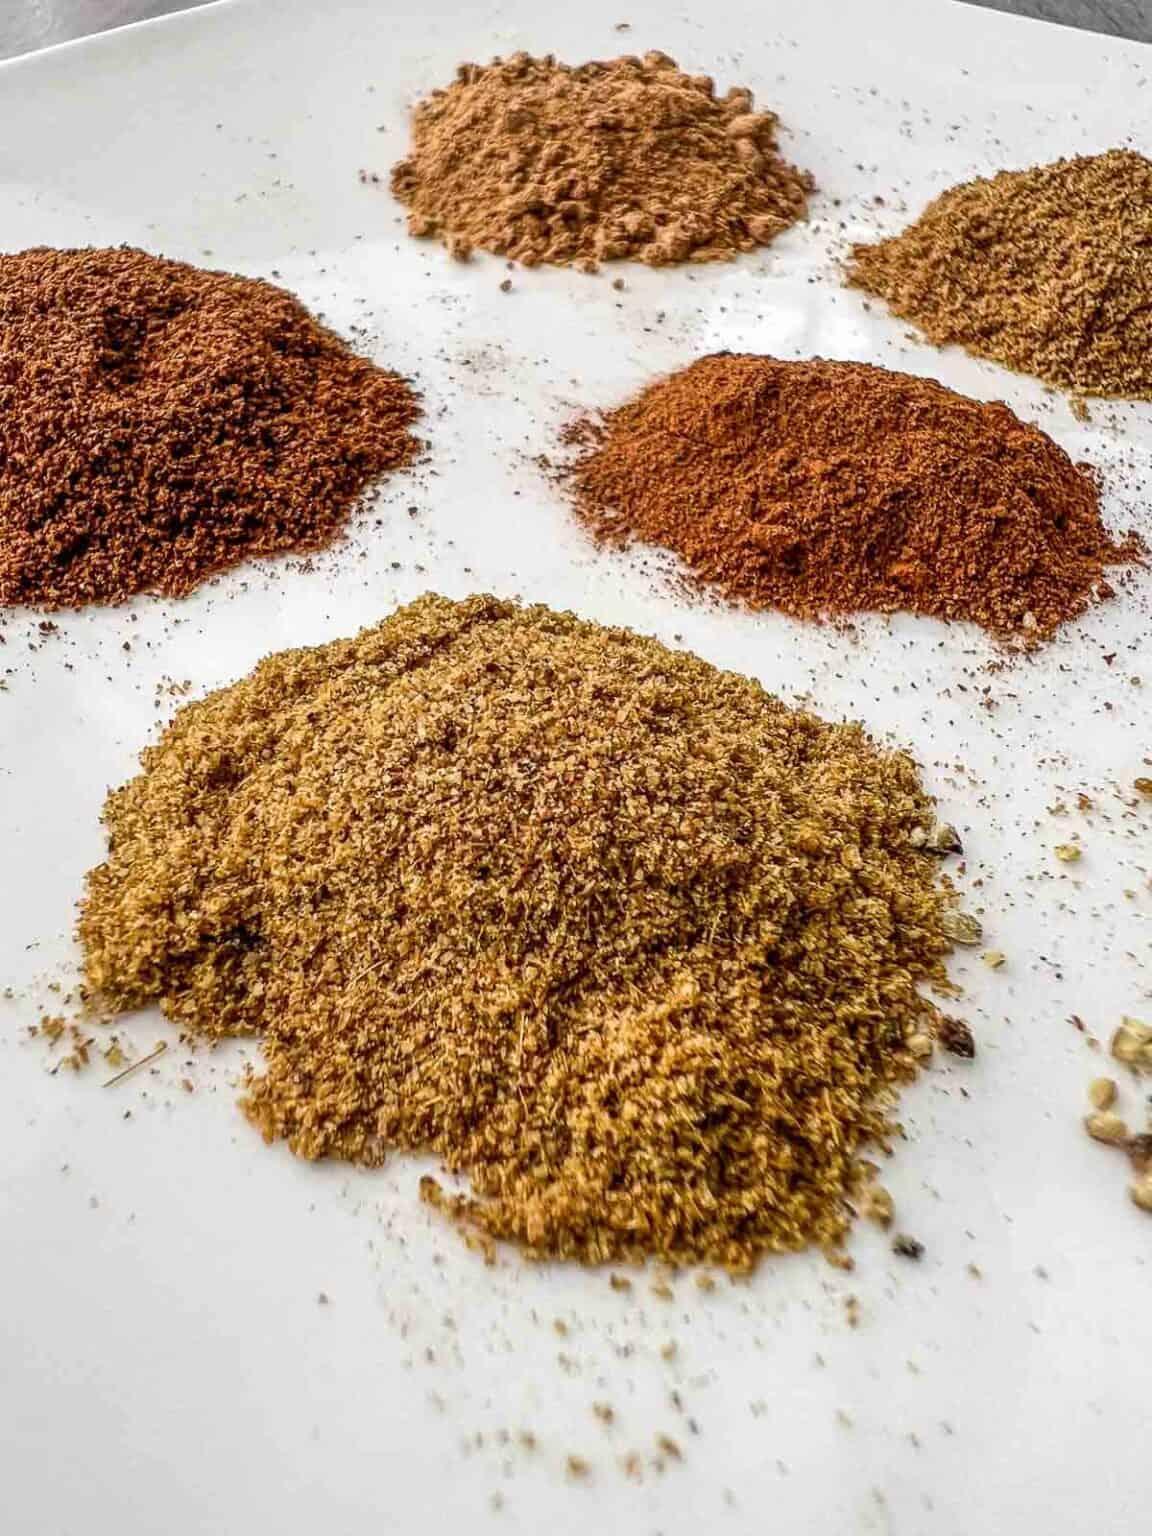 Lebanese Seven Spices 8874 1152x1536 